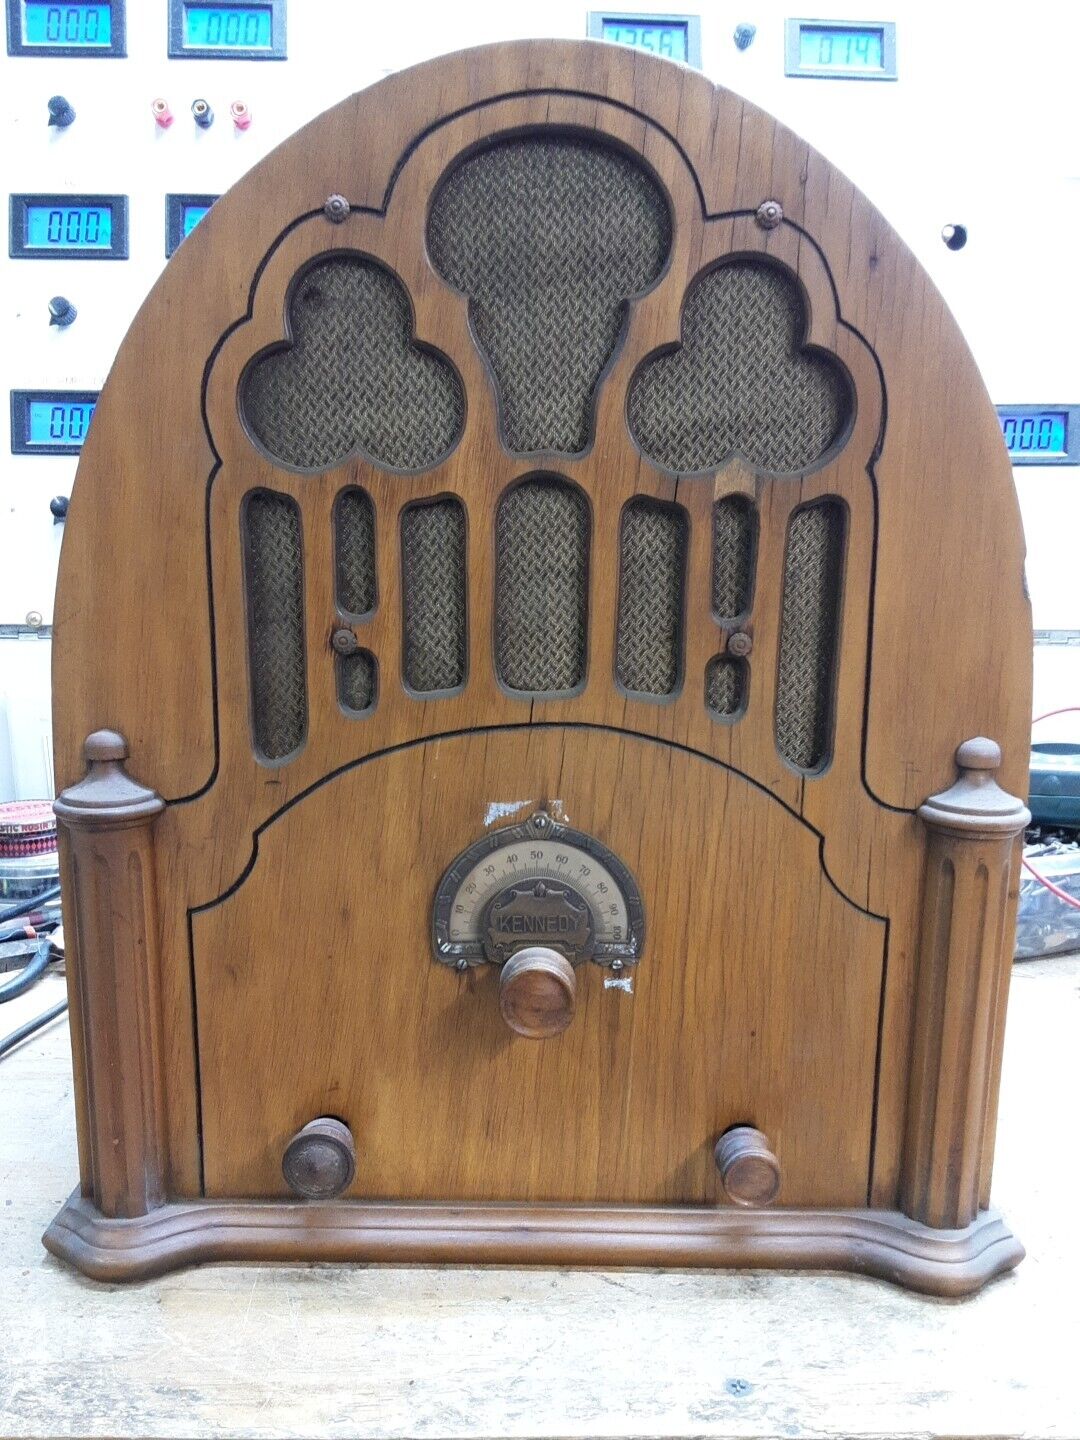 1931 KENNEDY  COSMOPOLITAN   -  Rare CATHEDRAL -  Model 63A - ROYALTY OF RADIOS